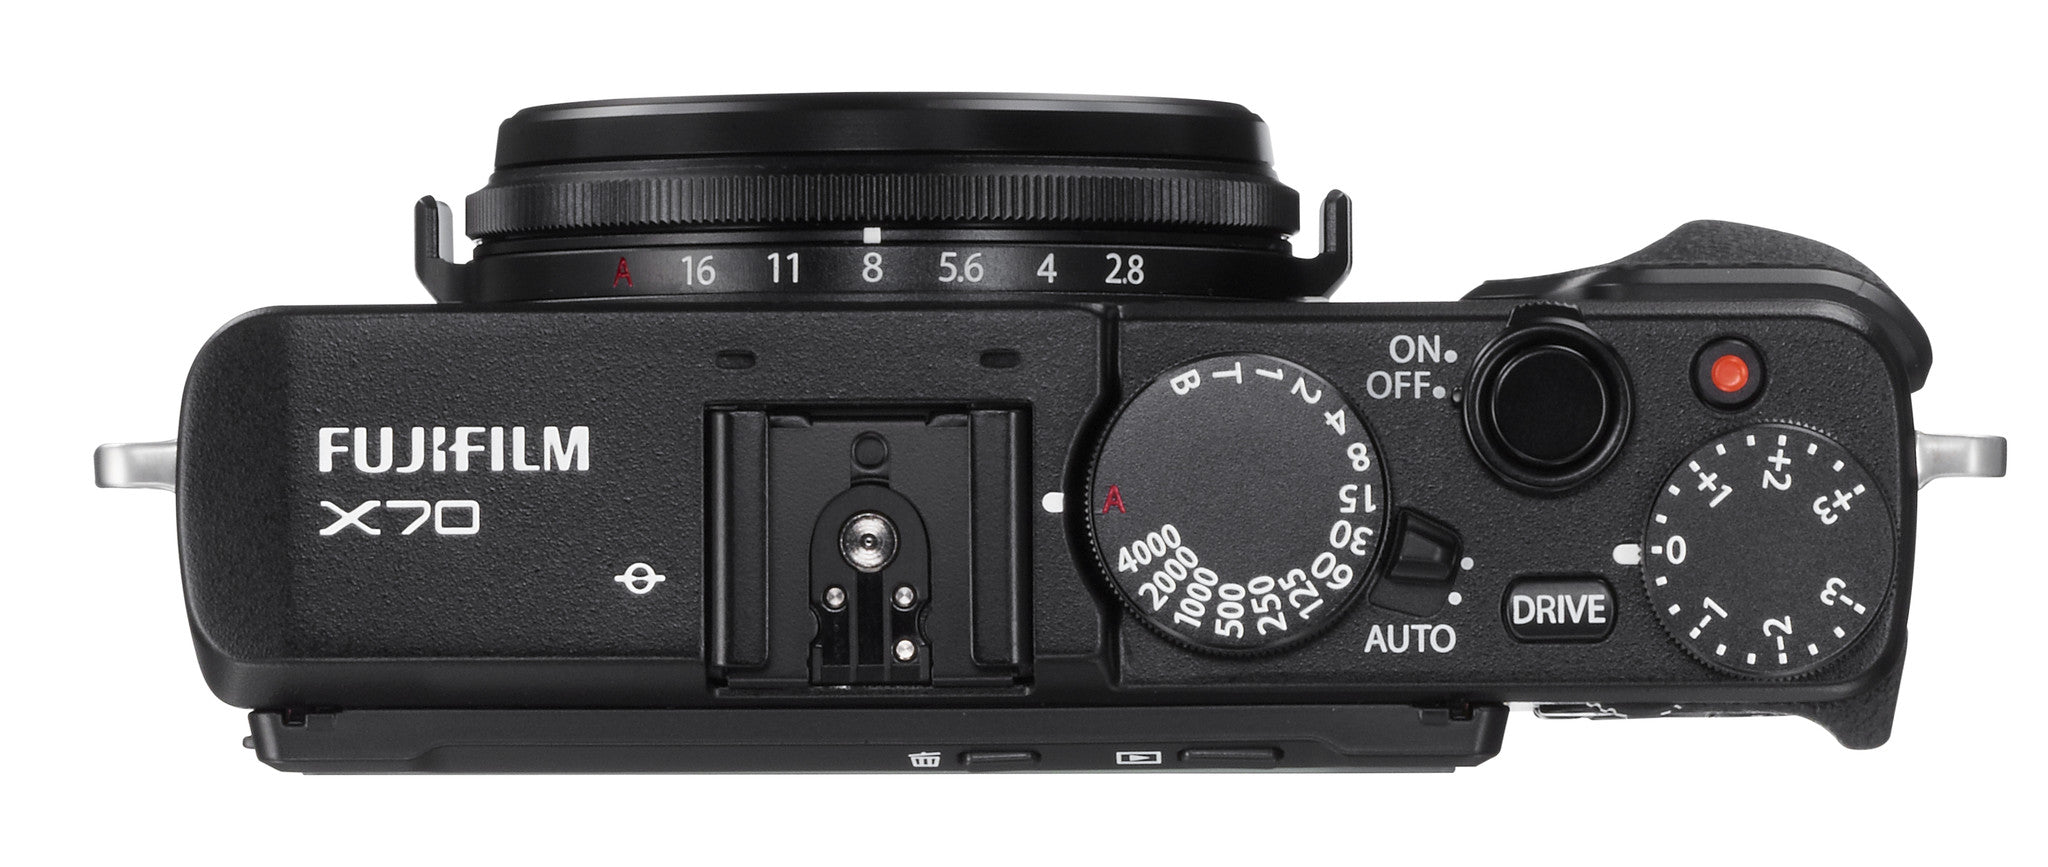 Fujifilm X70 Digital Camera (Black), camera point & shoot cameras, Fujifilm - Pictureline  - 7